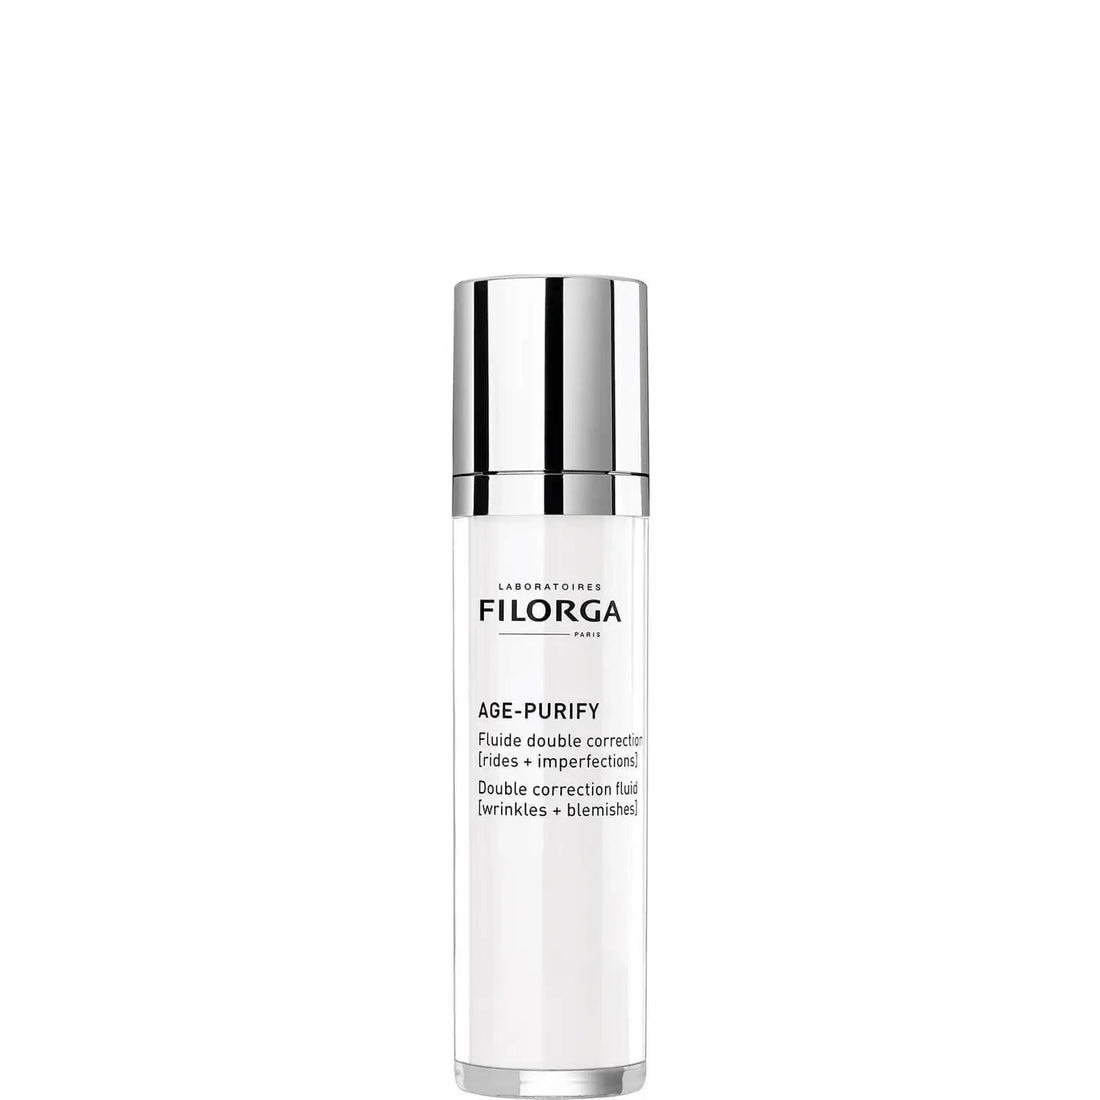 Filorga Age-Purify Double Correction Anti-Wrinkle Serum Fluid 50ml